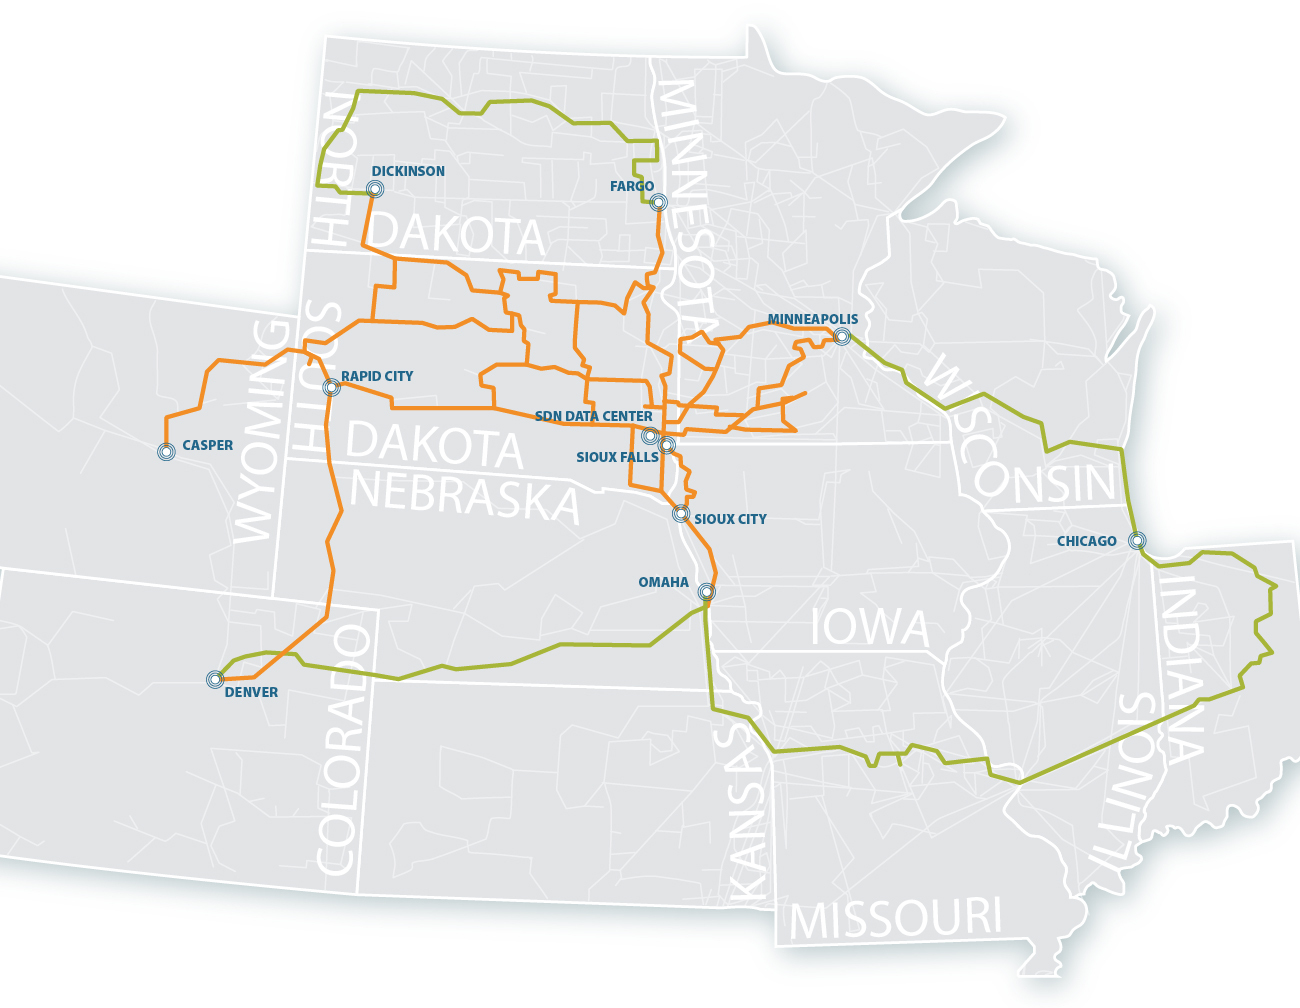 SDN Communications fiber internet map with routes in North Dakota, Minnesota, South Dakota, Nebraska and other states in the region.